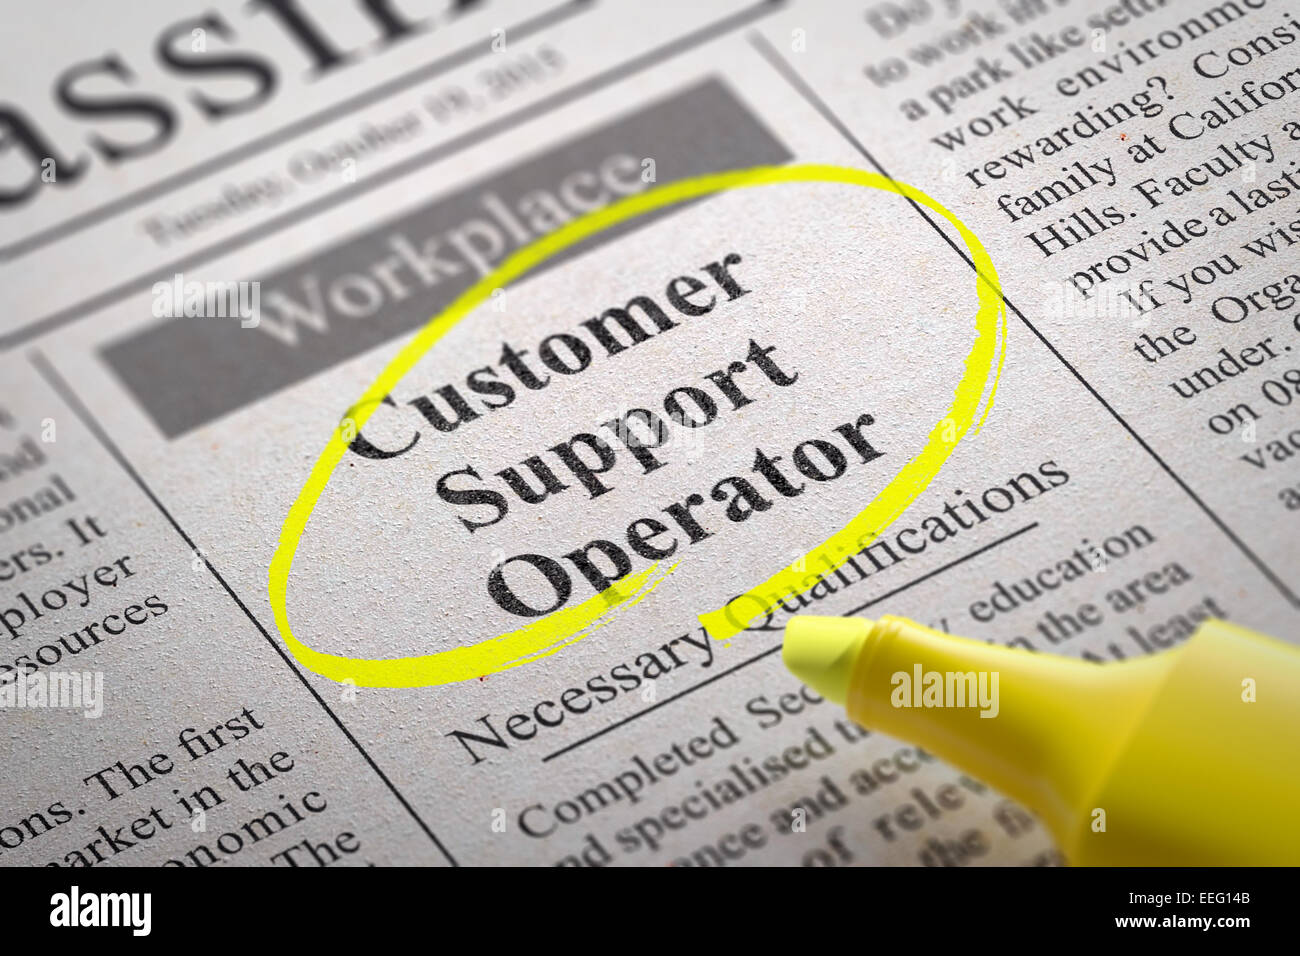 Customer Support Operator Vacancy in Newspaper. Stock Photo